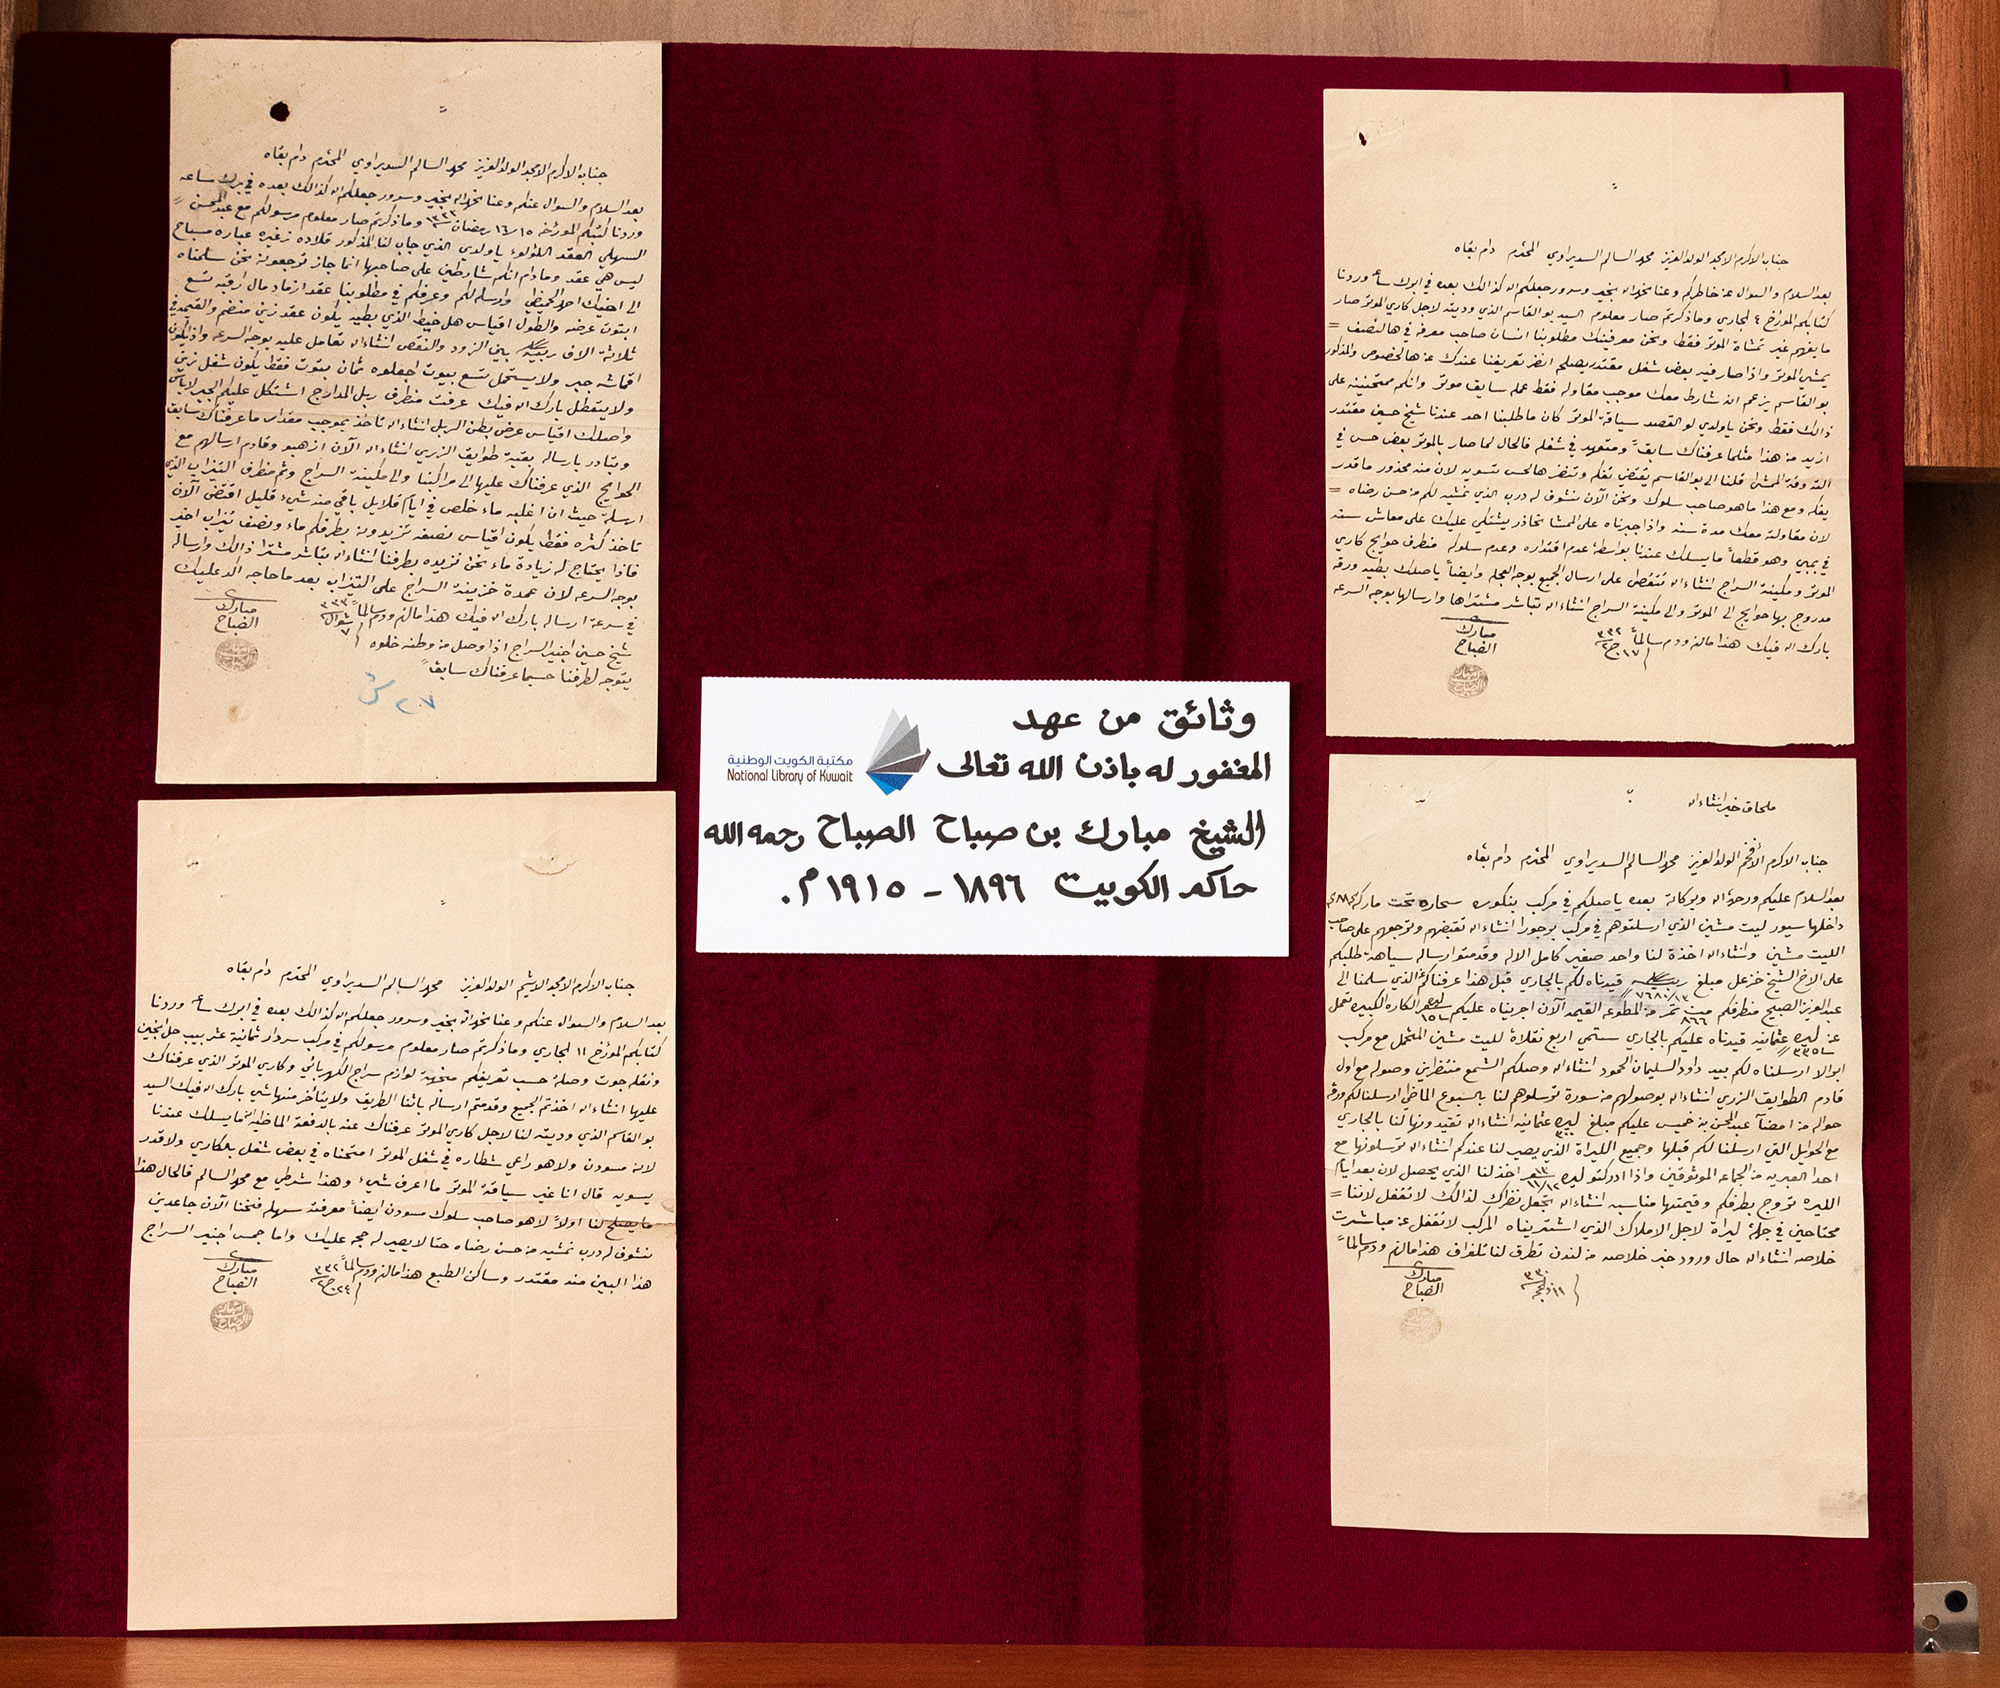 Kuwaiti books, manuscripts and documents